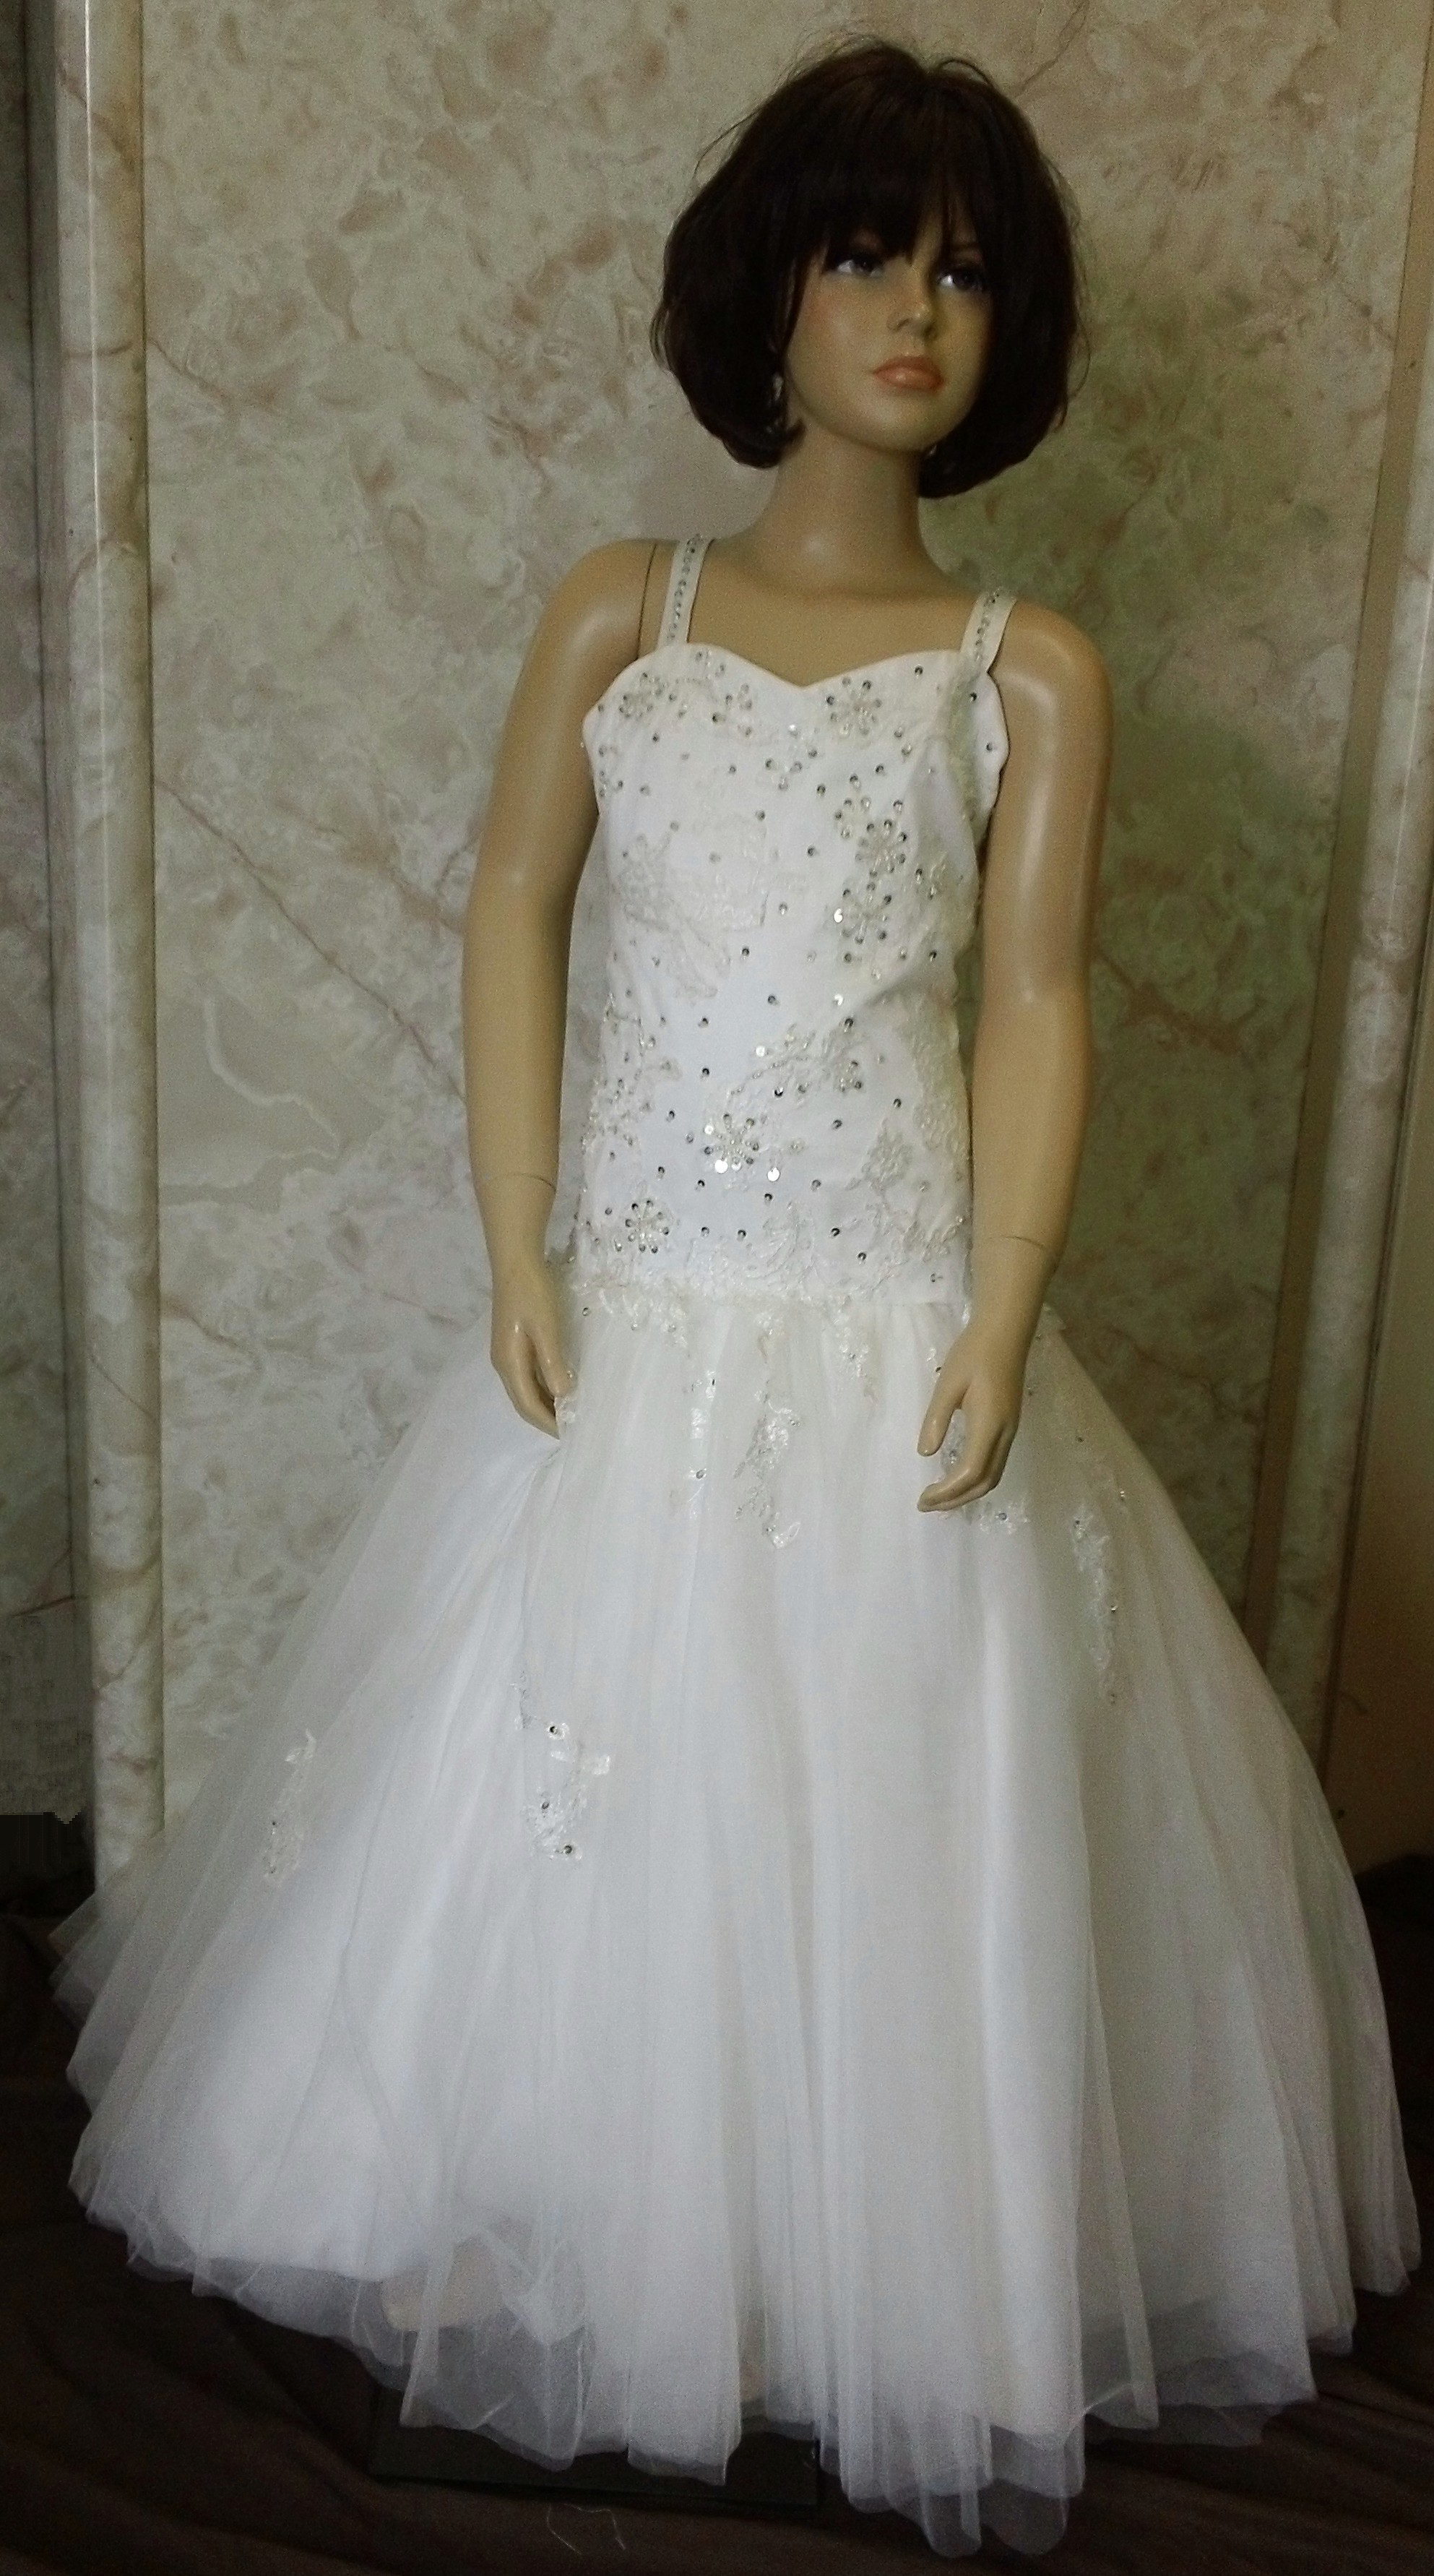 Miniature bride dresses.